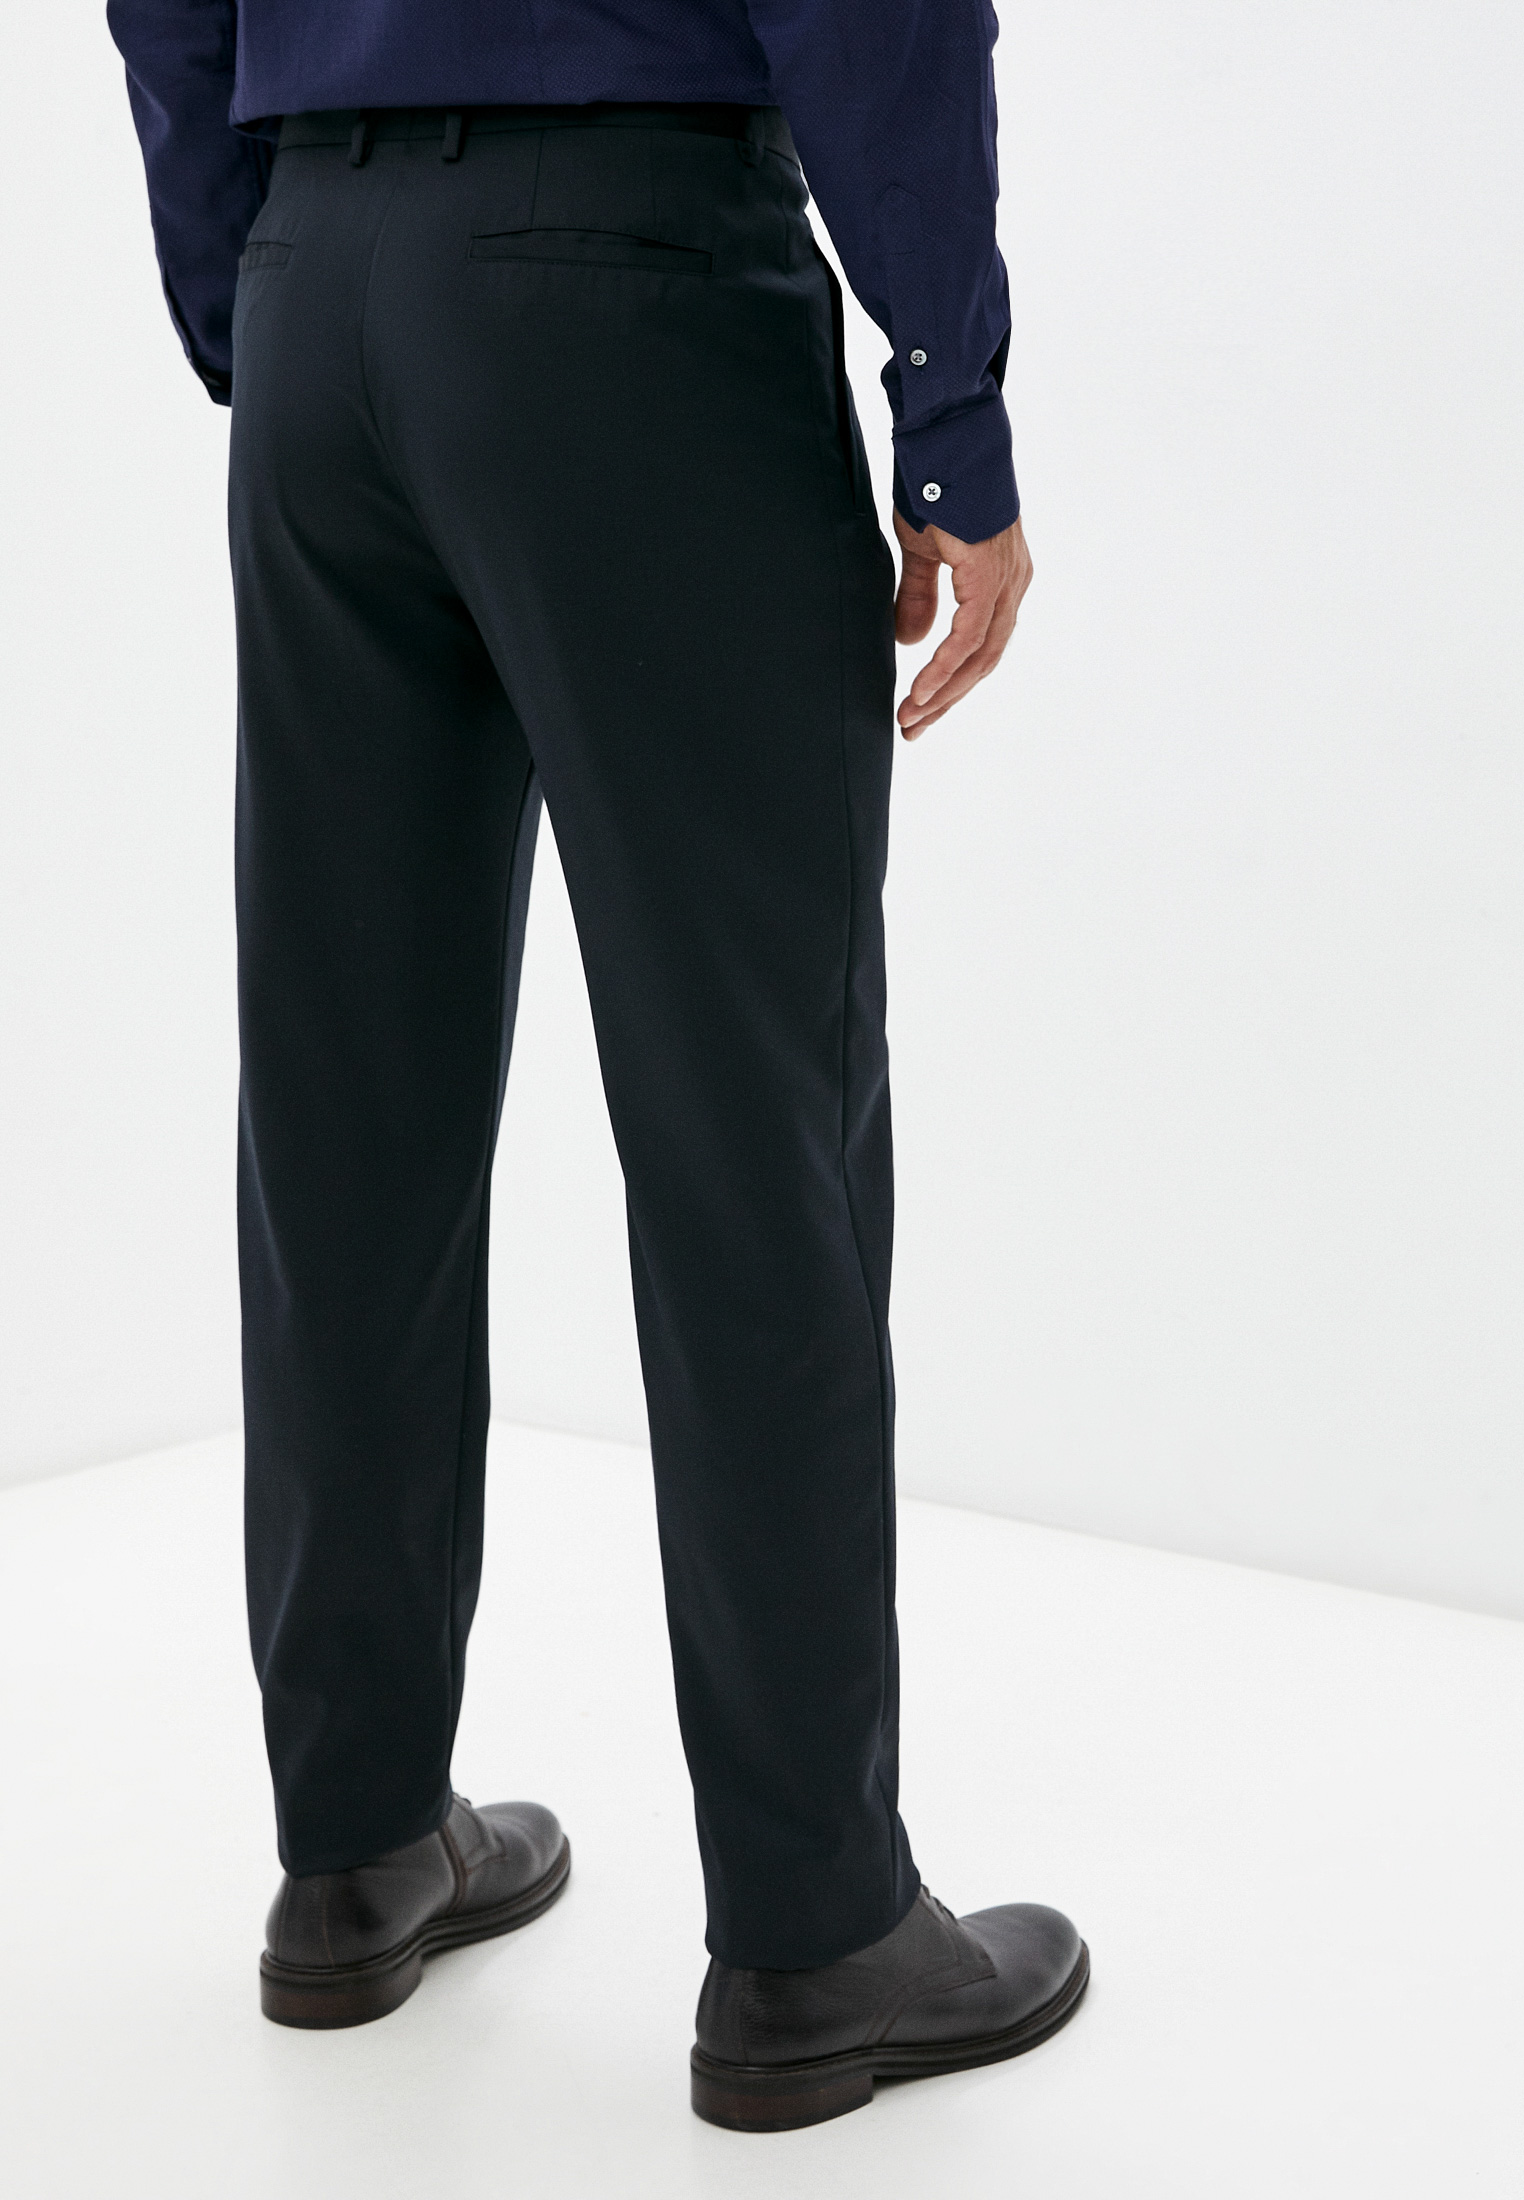 Мужские классические брюки Emporio Armani (Эмпорио Армани) W1P210 W1026: изображение 4